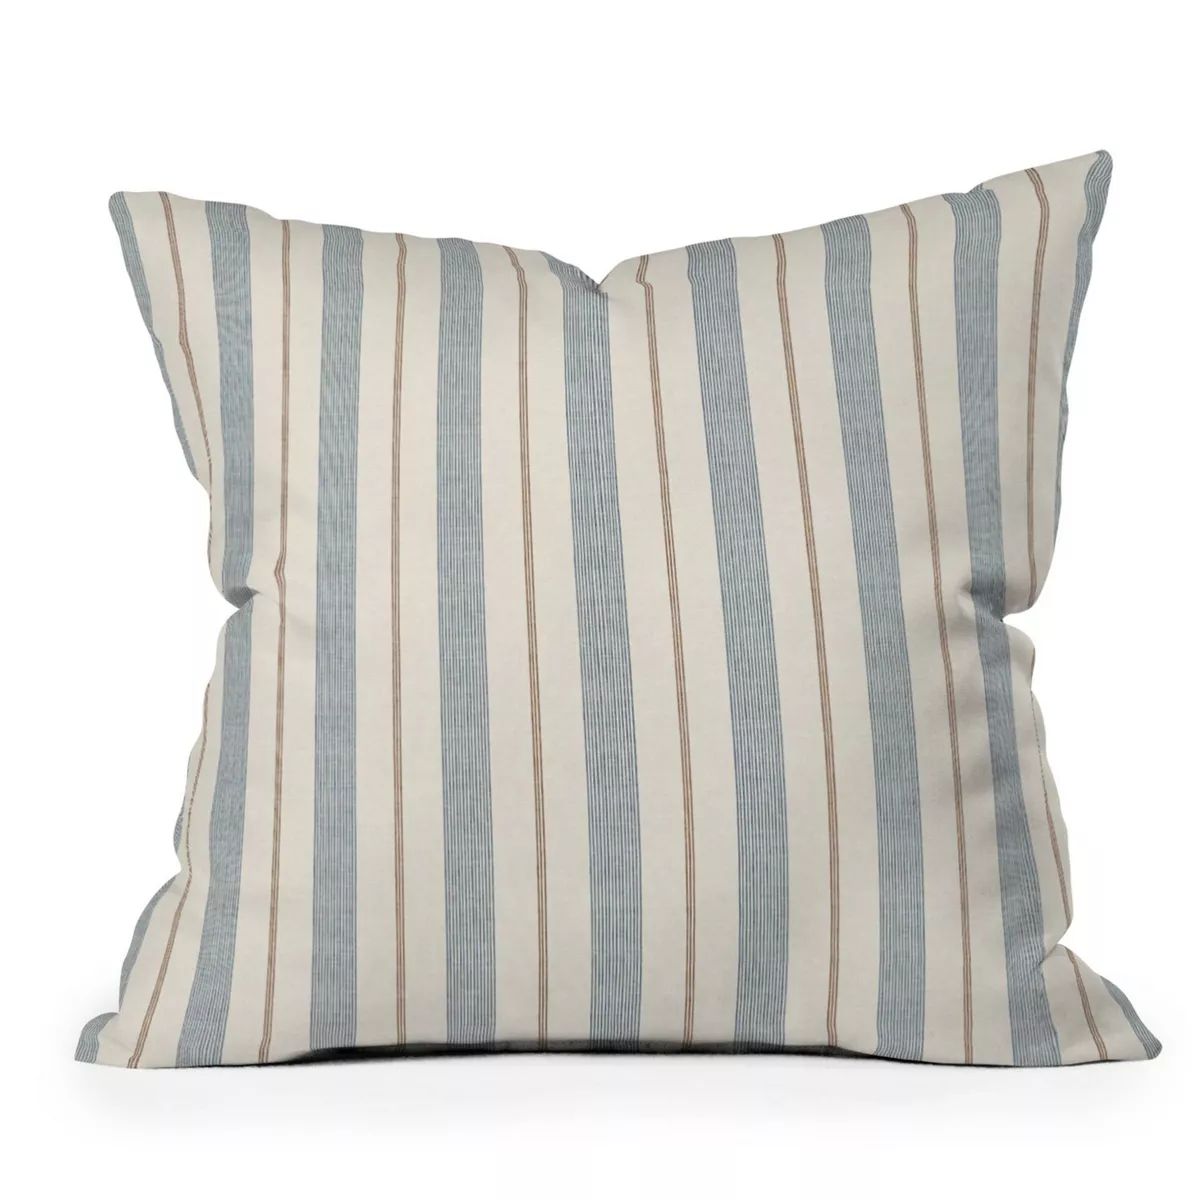 Little Arrow Design Co. Ivy Stripes Outdoor Throw Pillow Cream/Blue - Deny Designs | Target